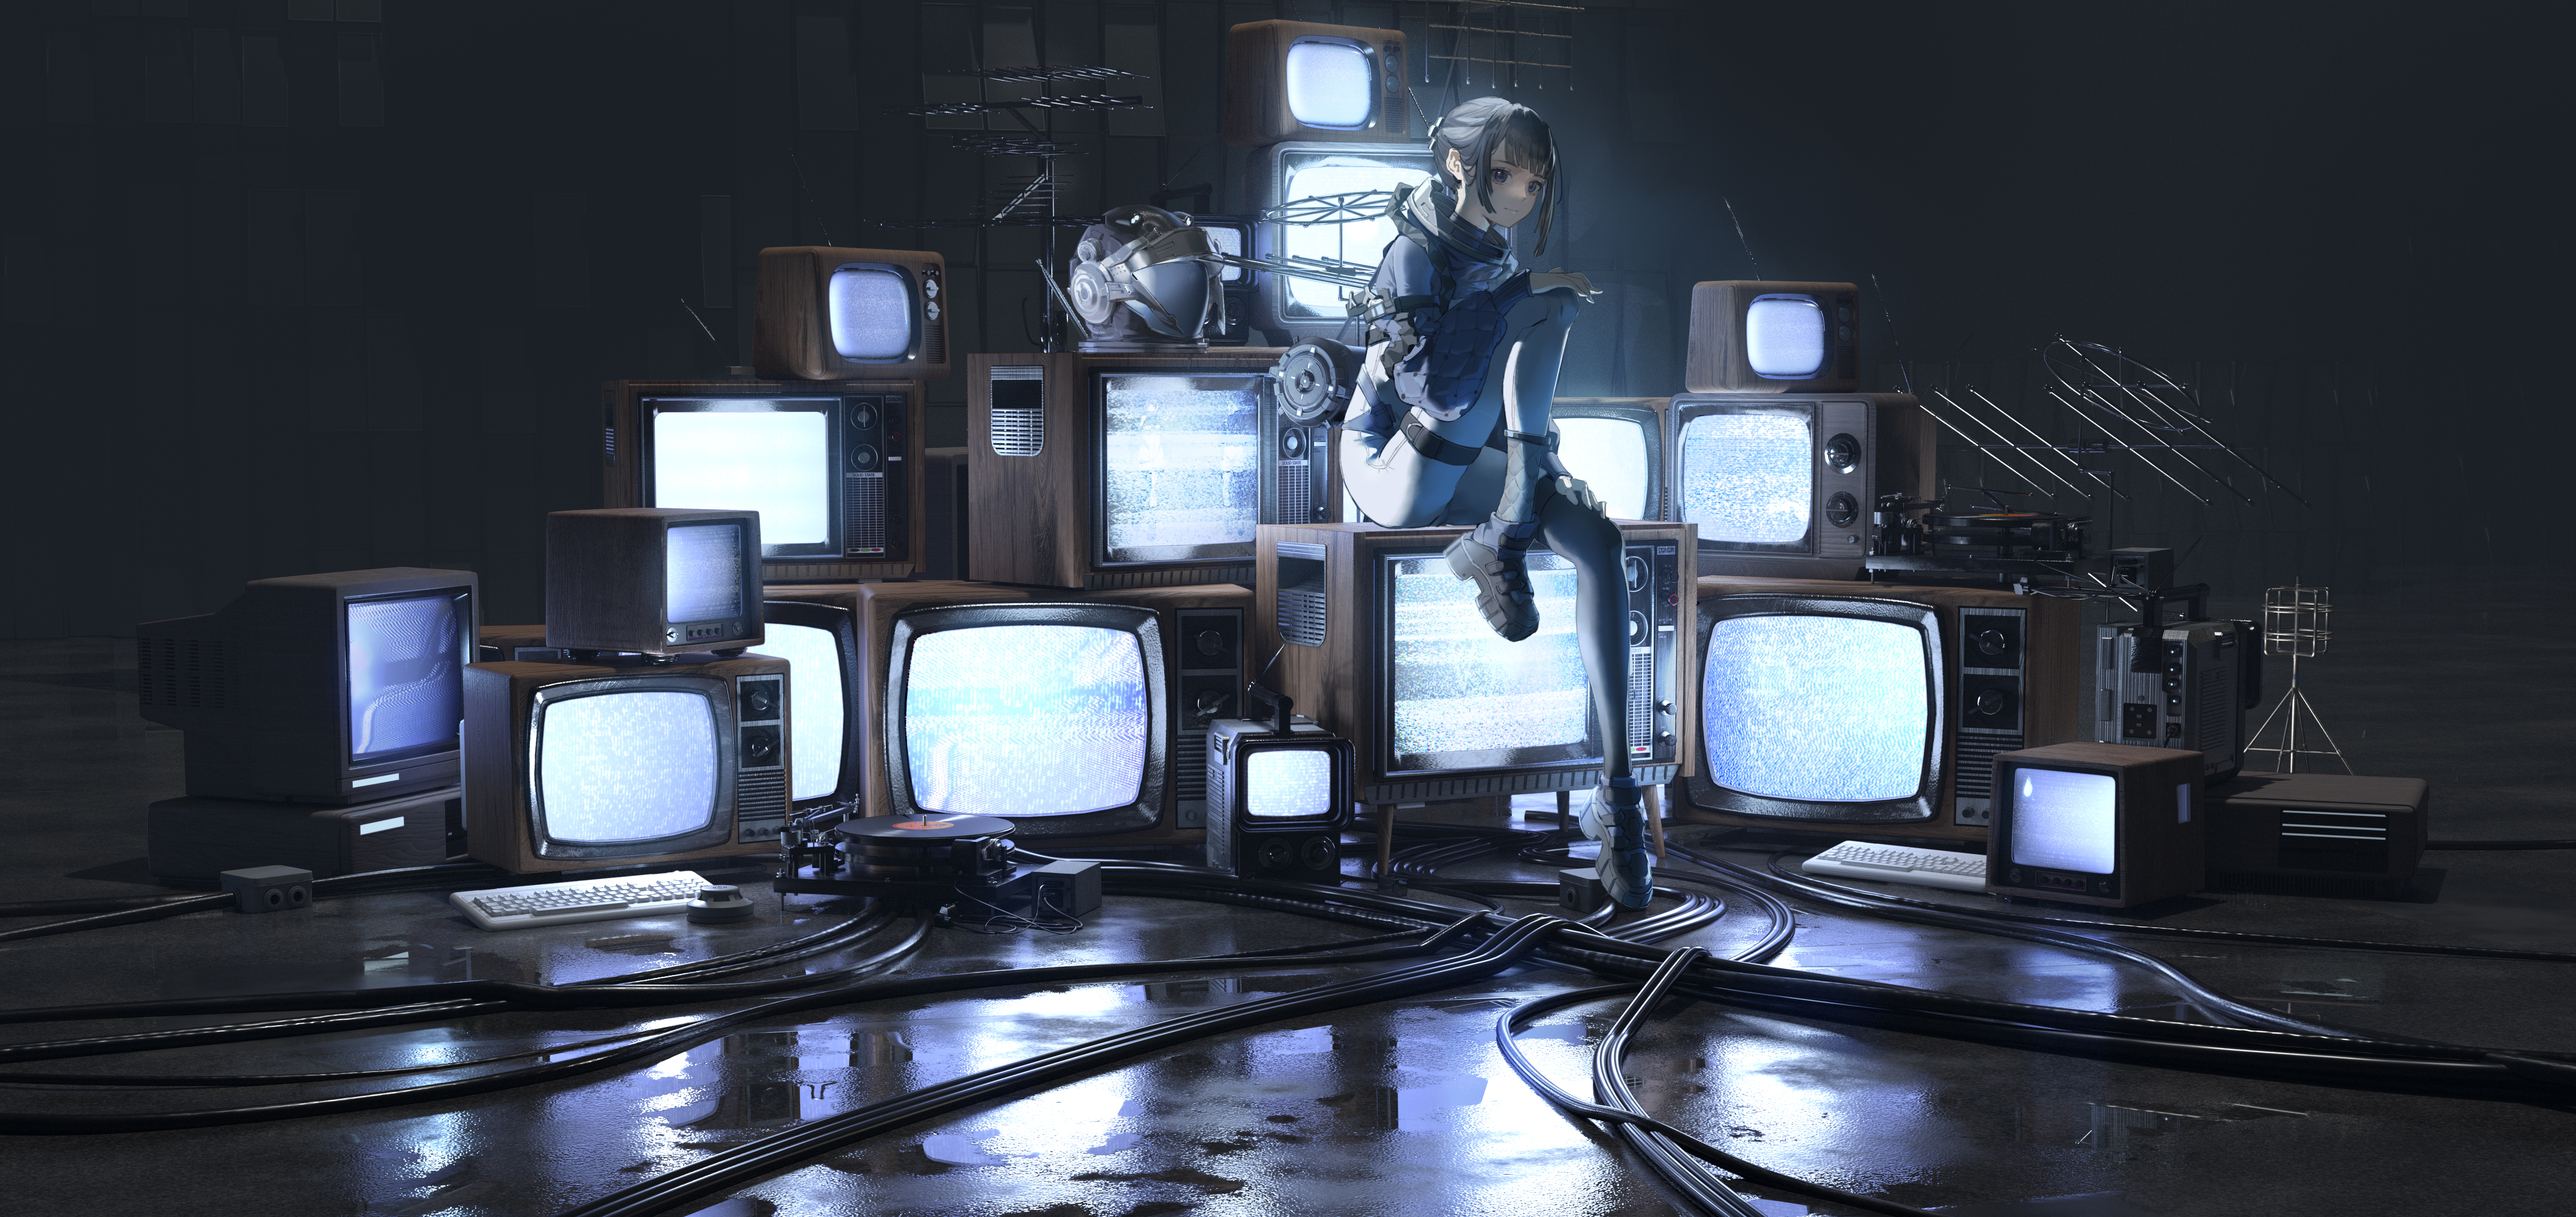 Anime Anime Girls Abstract Digital Digital Art Television Sets TV Reflection Lights Sitting 5834x2756